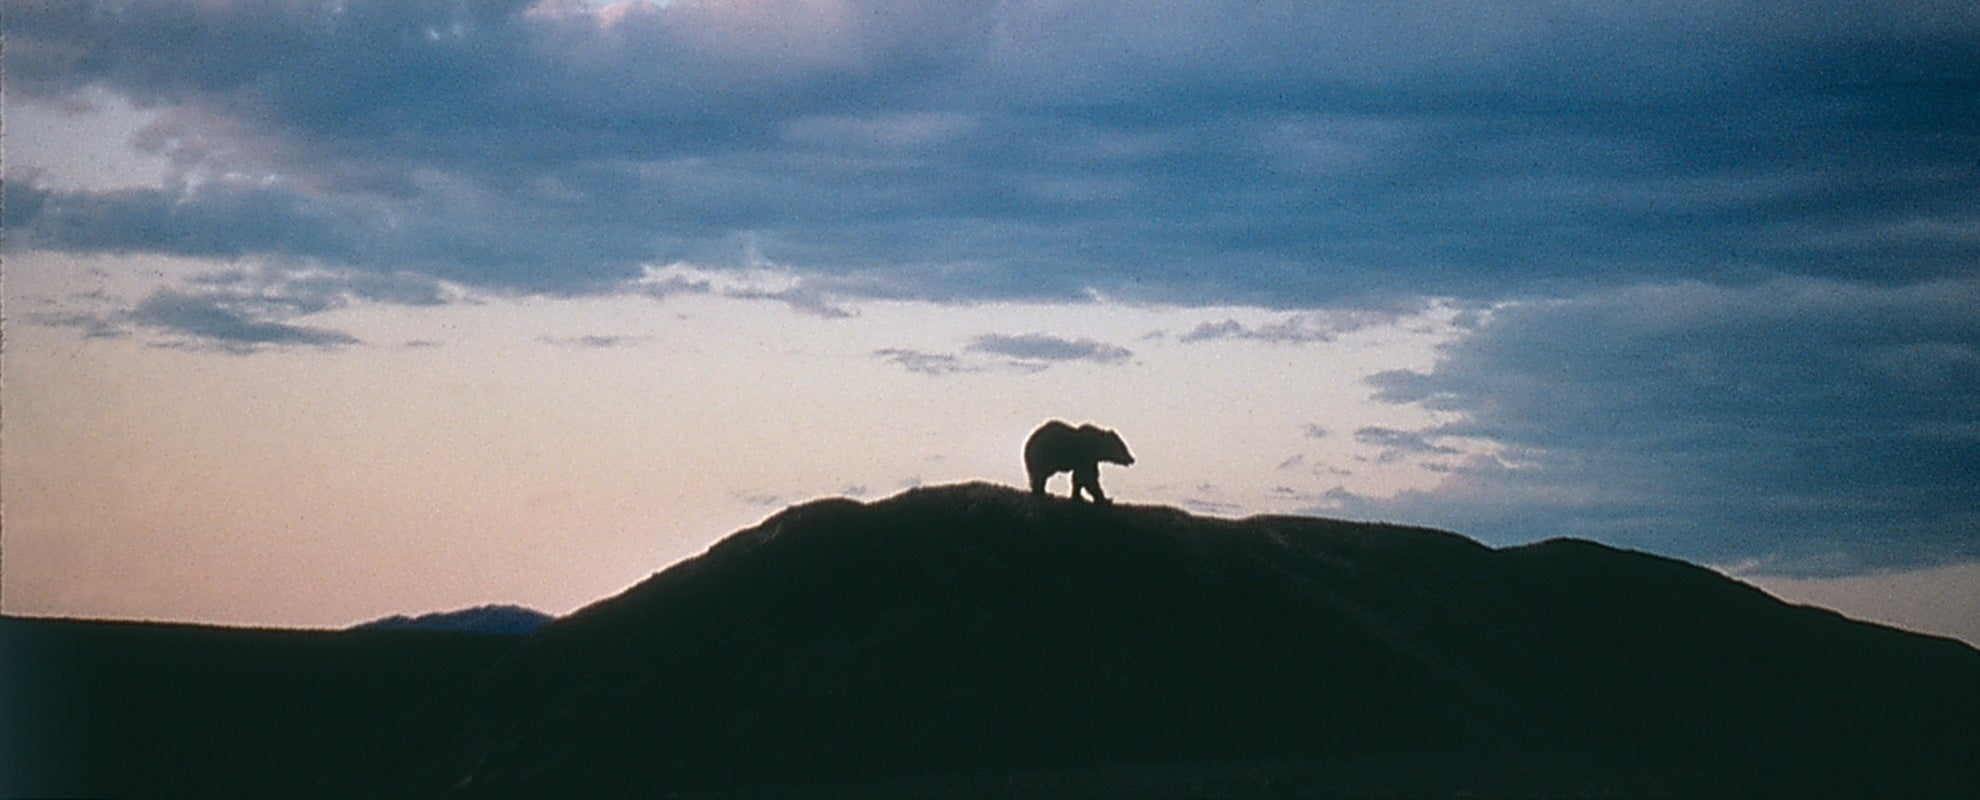 A grizzly bear on a ridge.